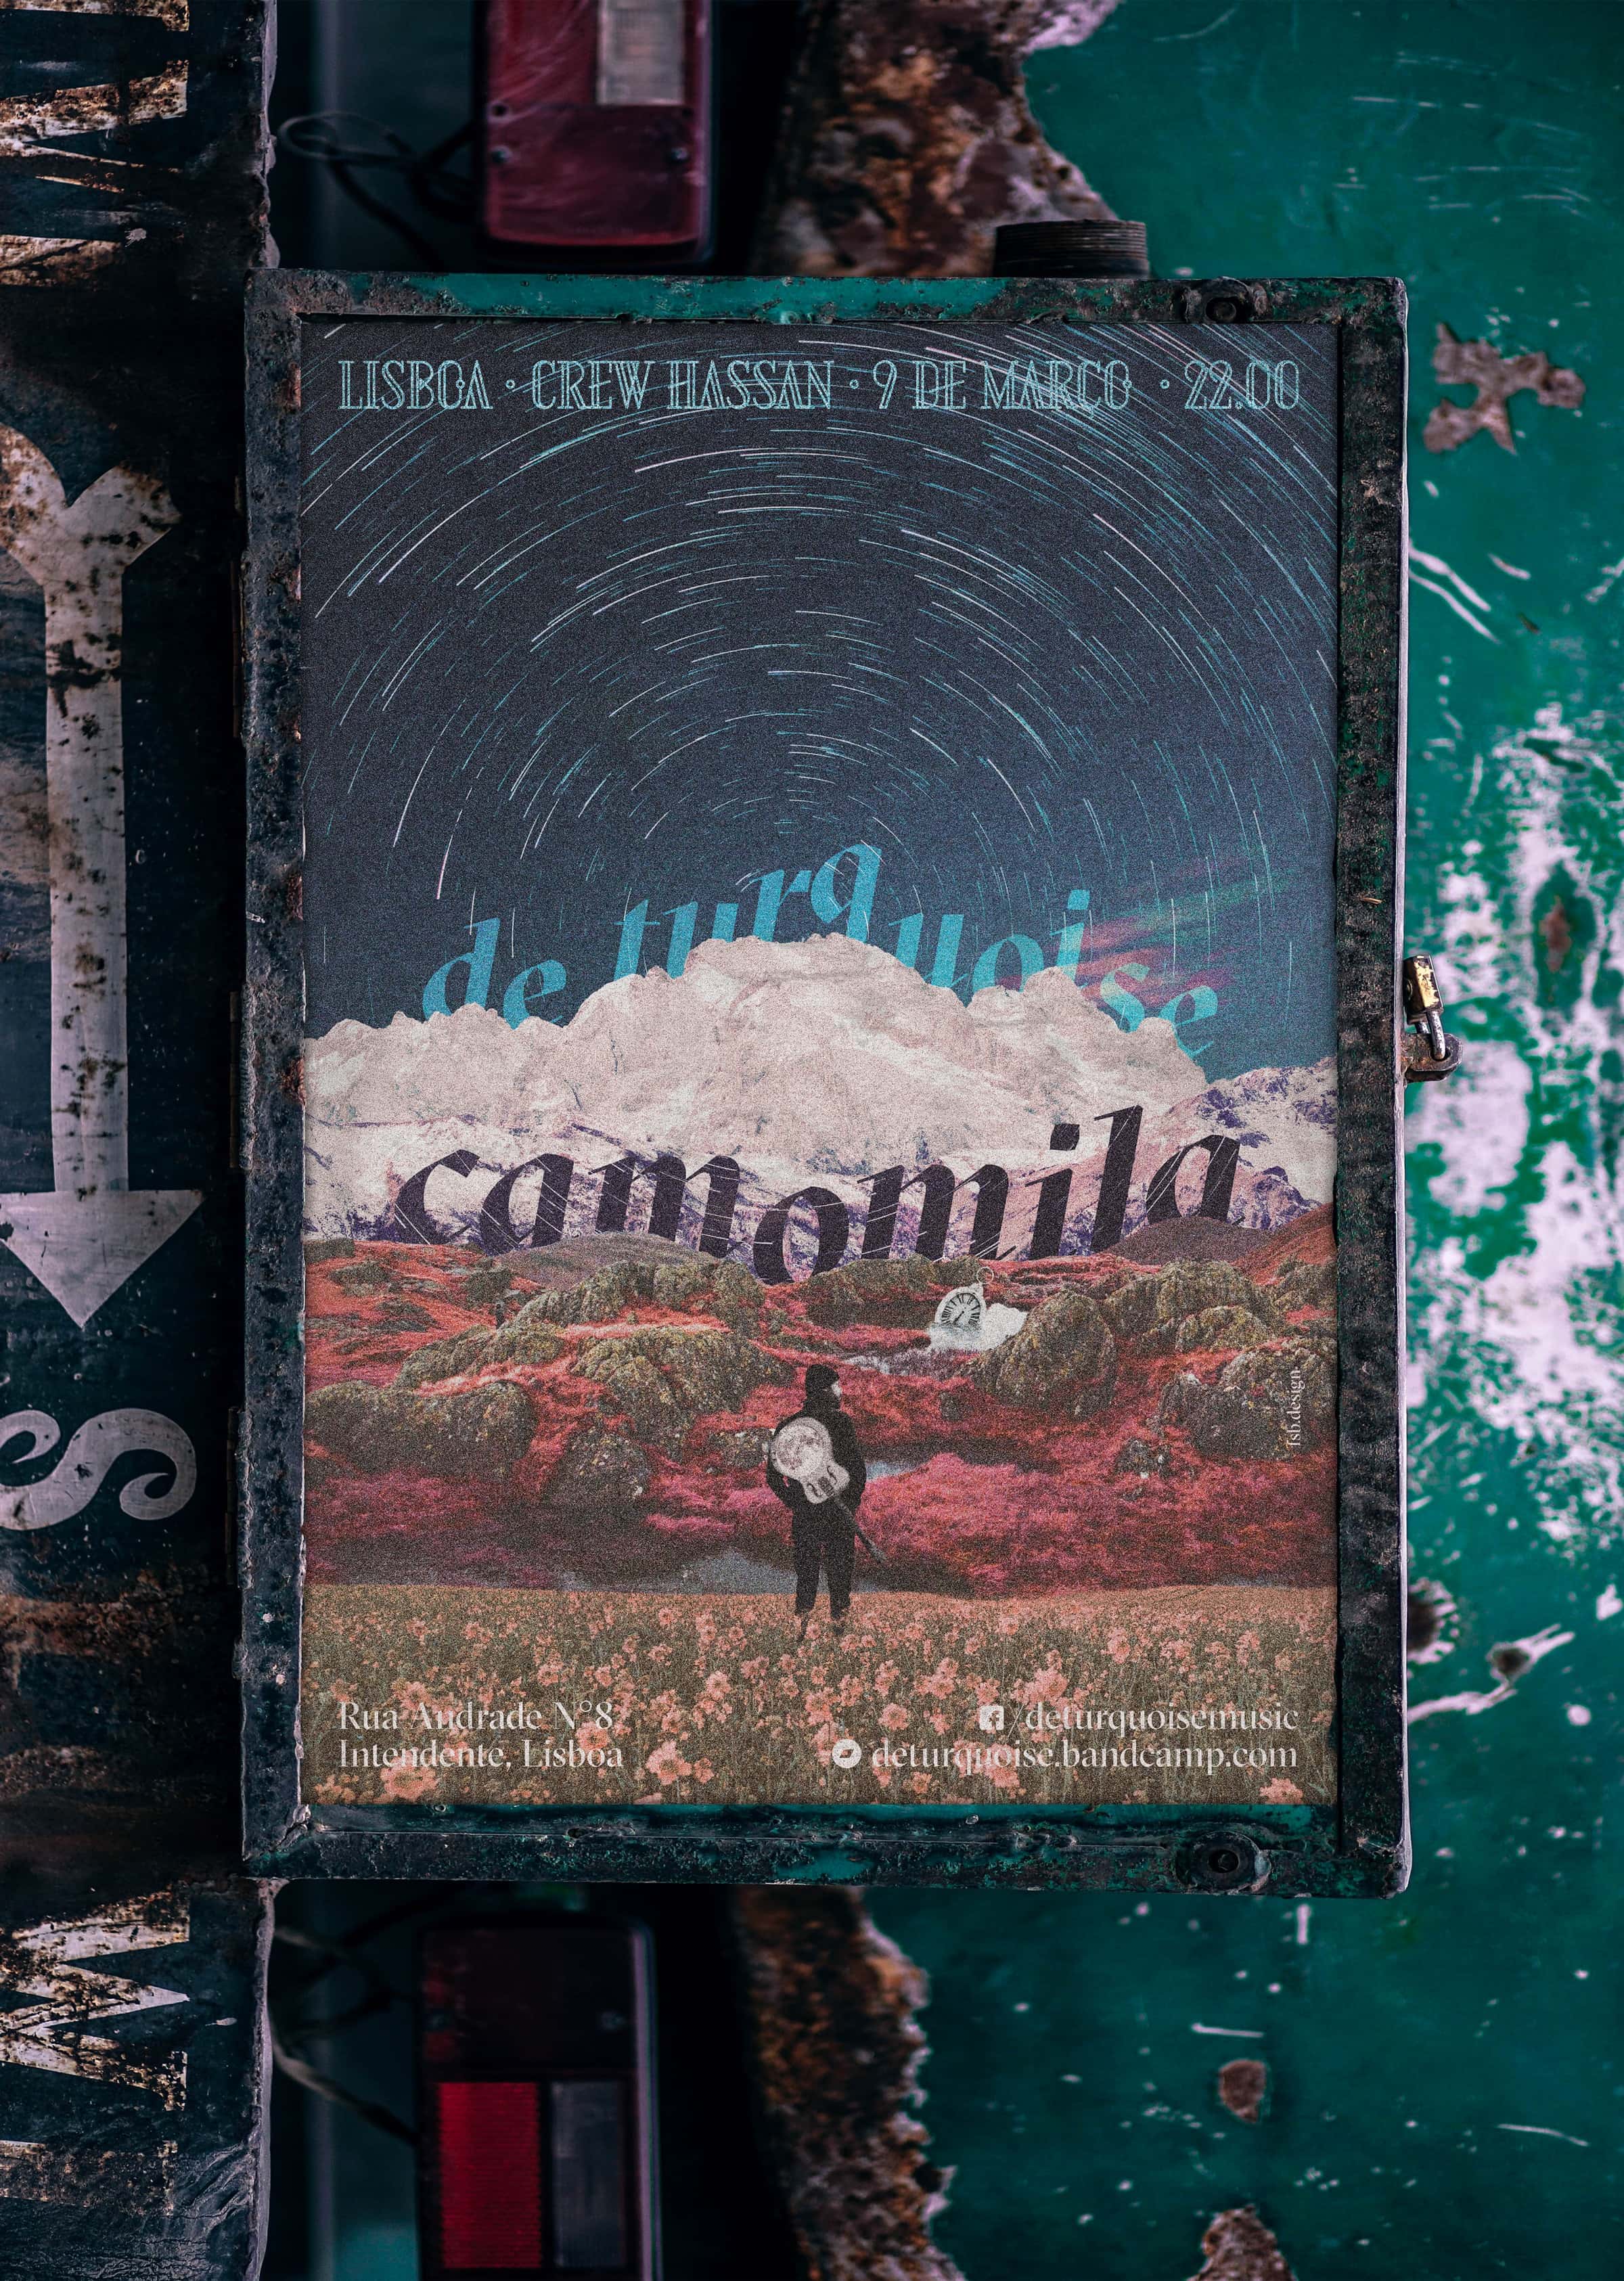 De Turquoise’s “Camomila” concert poster